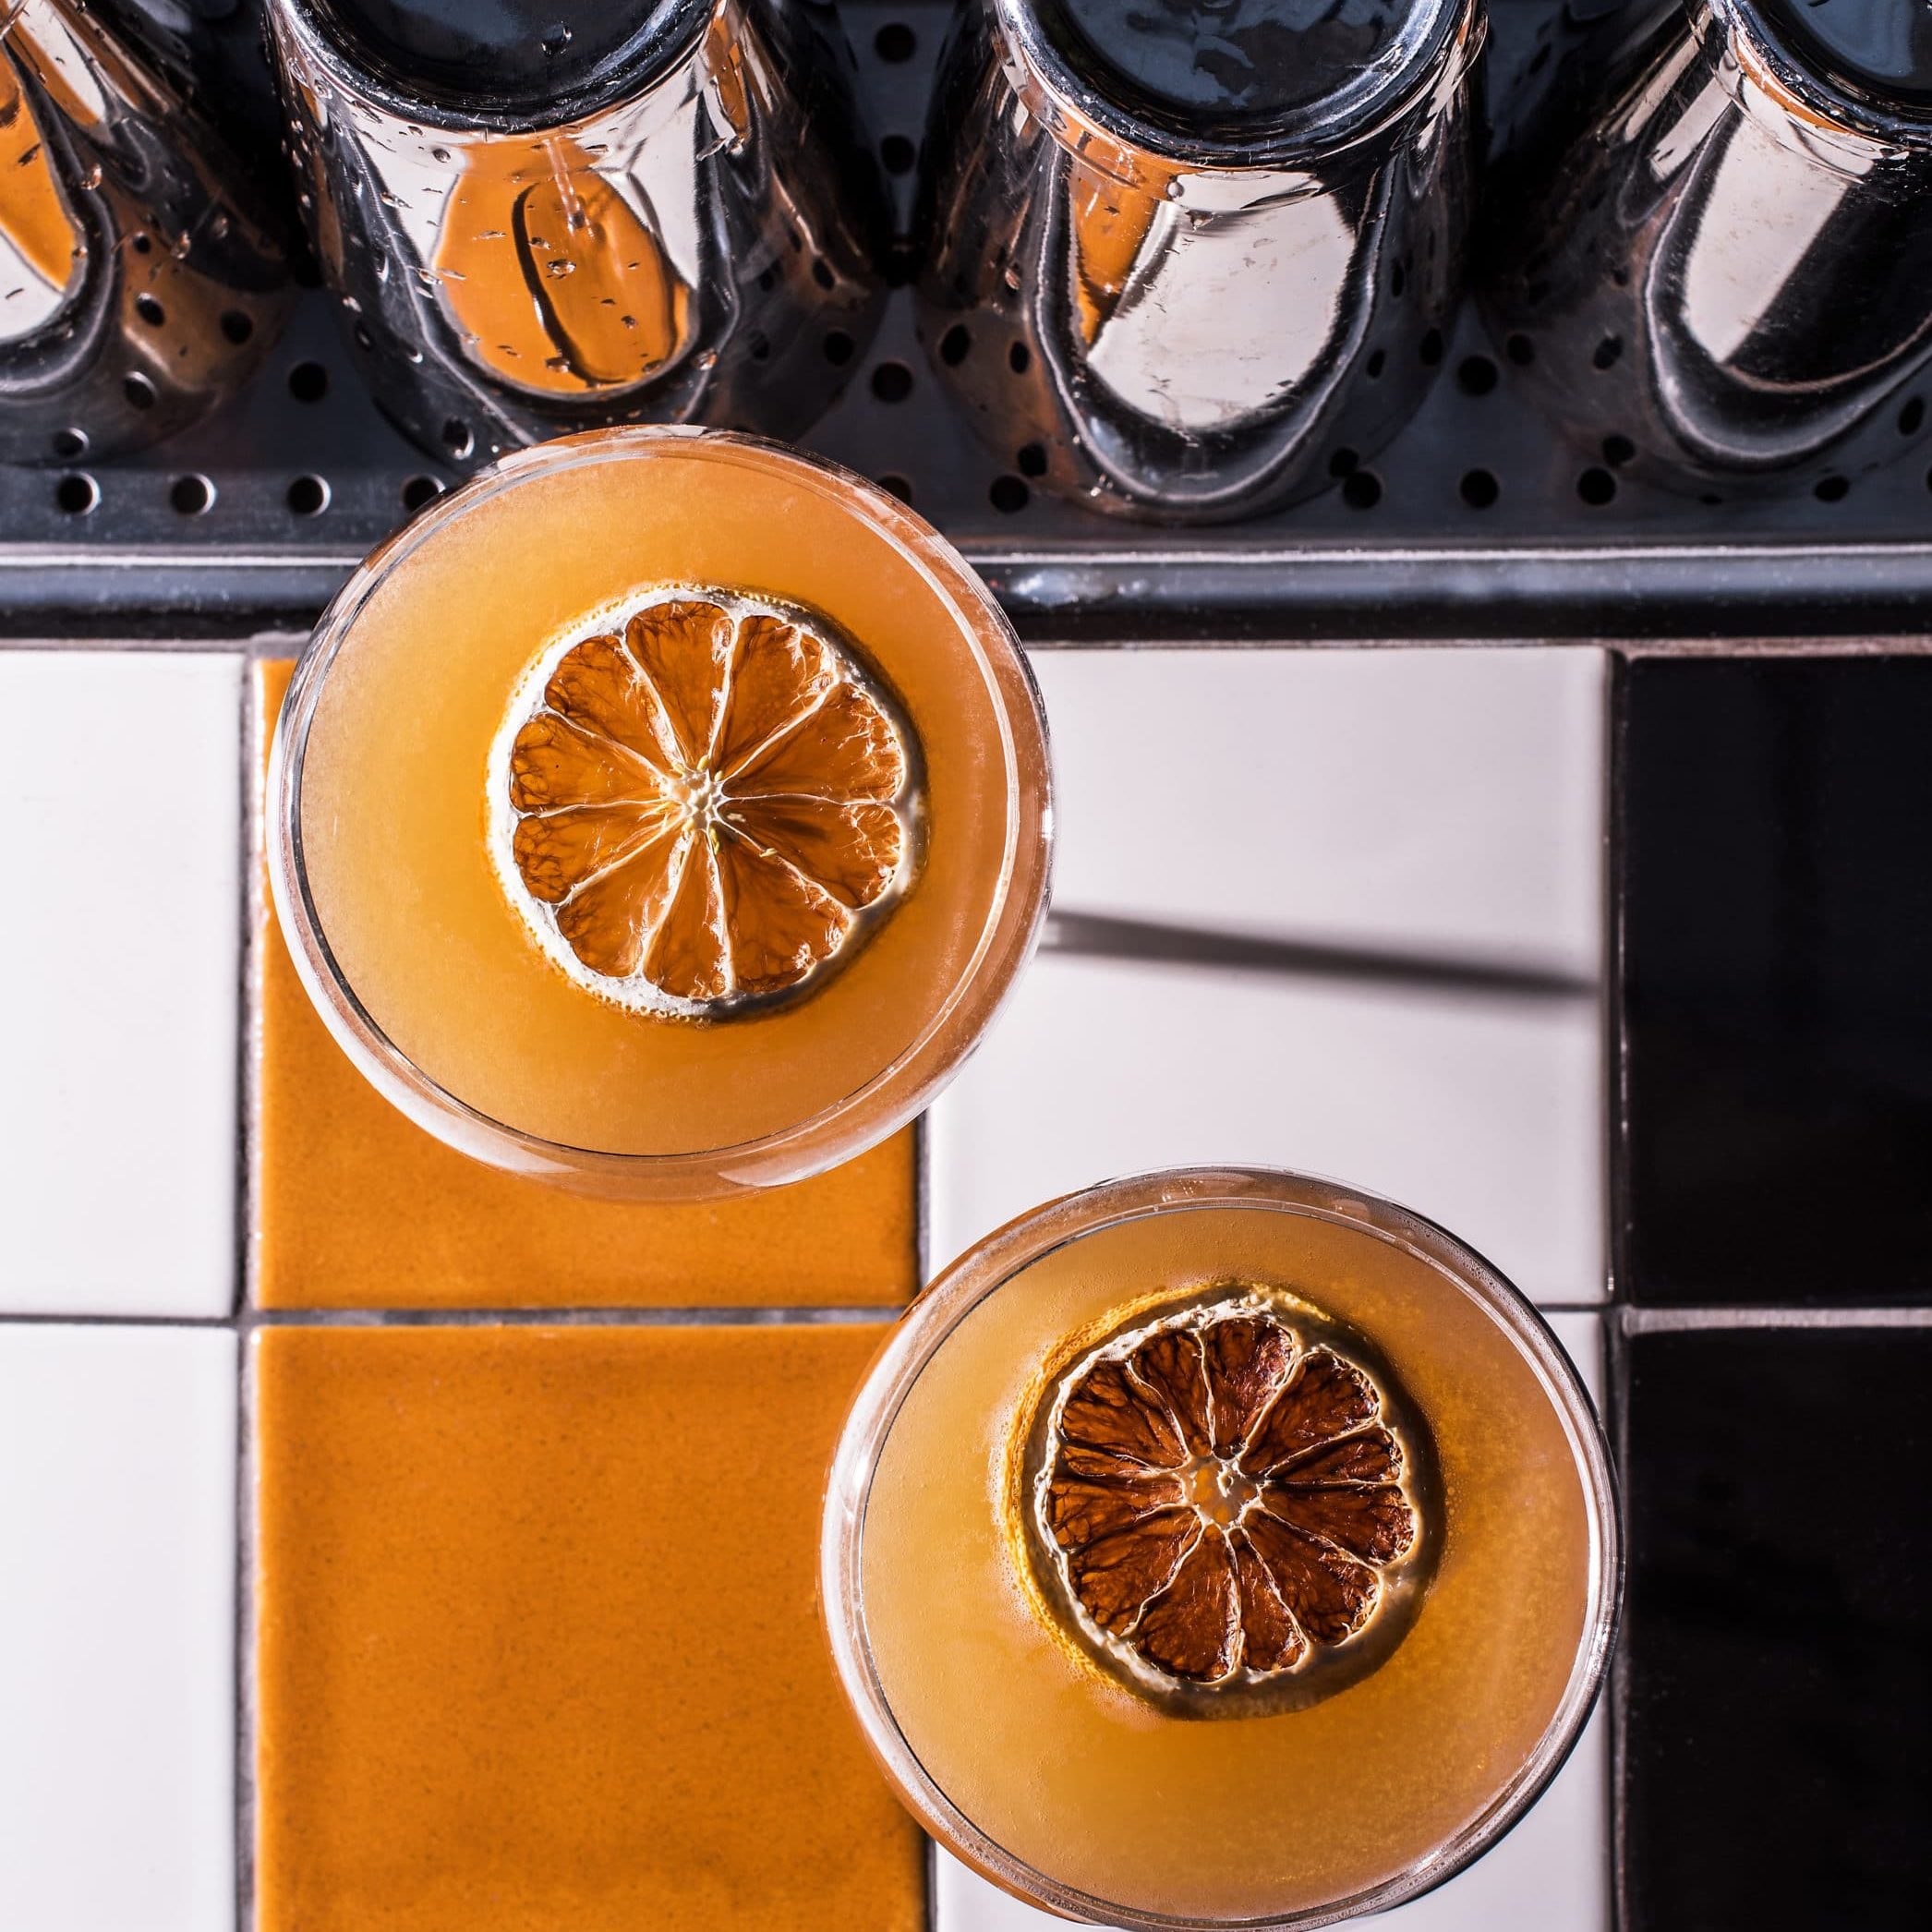 citrus cocktails at a bar